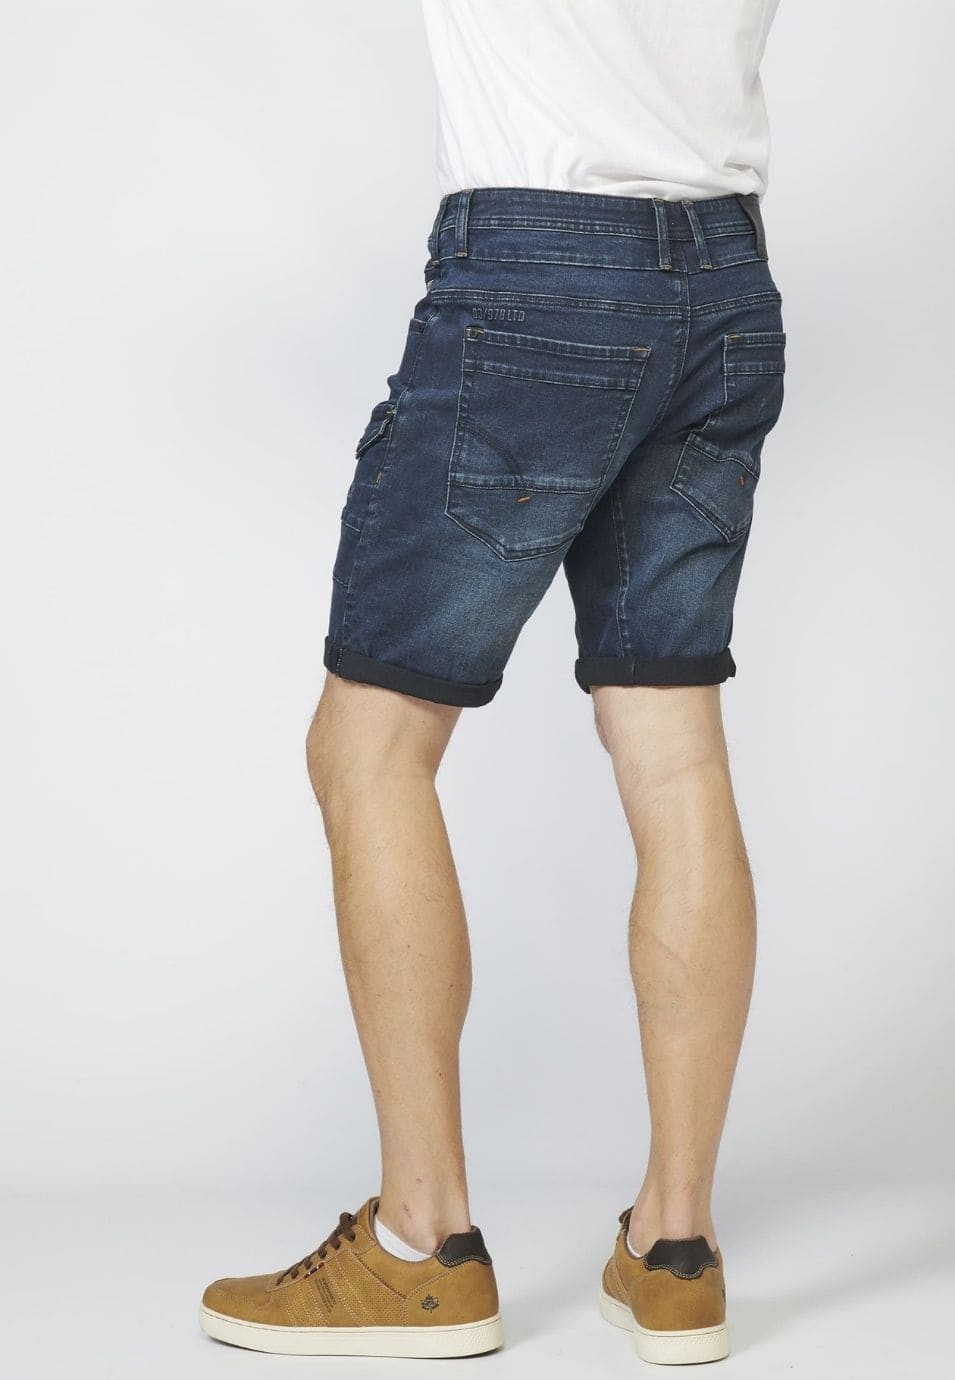 Pantalon corto denim cortes regular fit 3